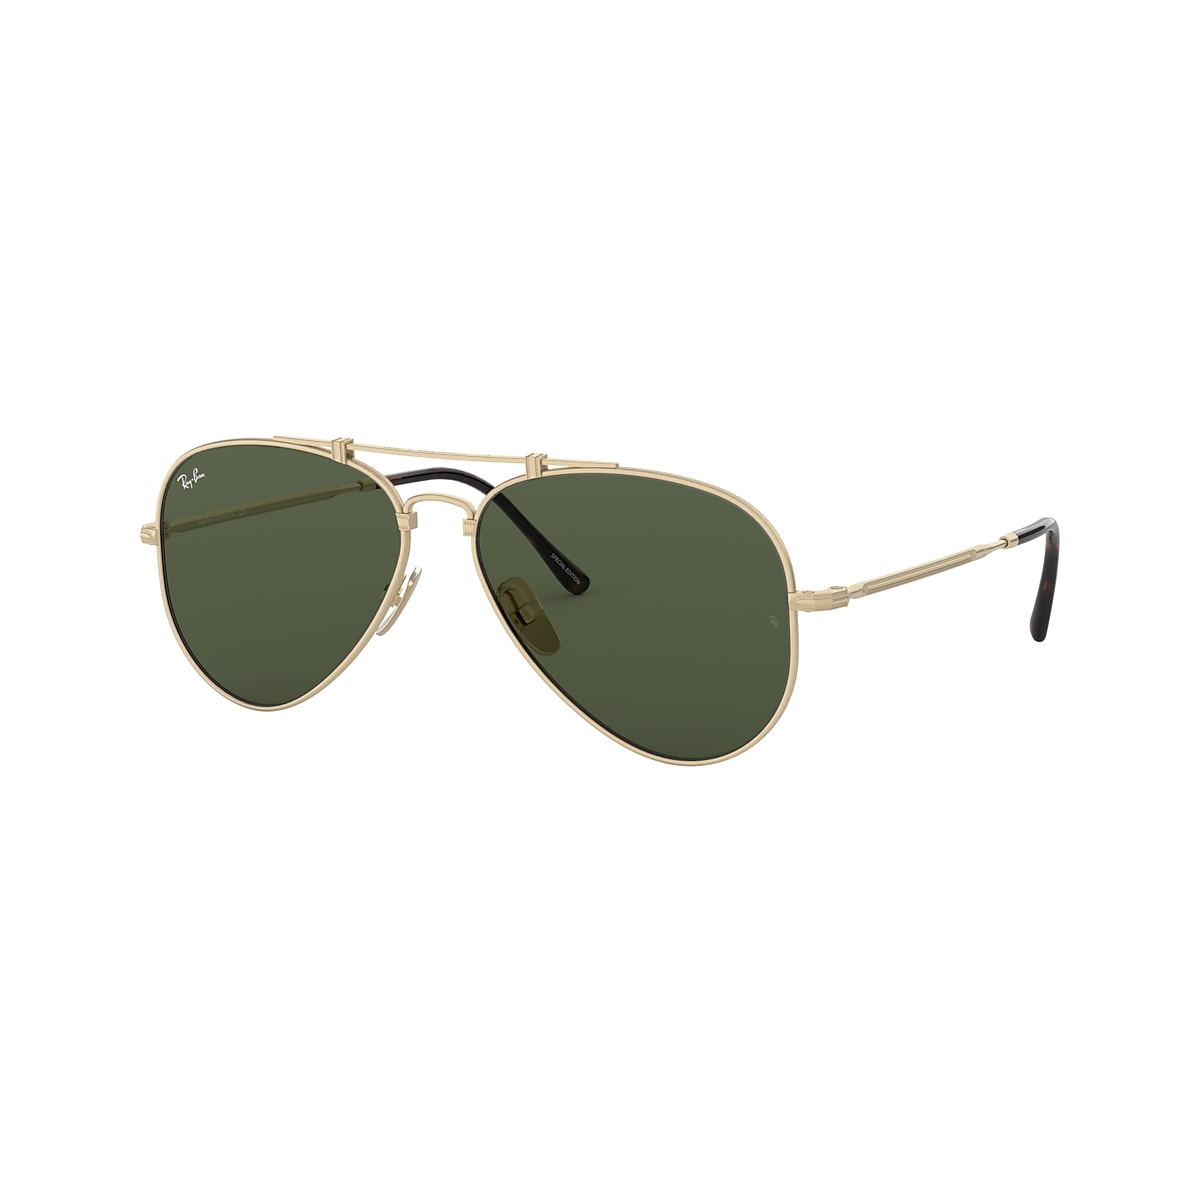 RB8125 Aviator 58 Green & Gold Sunglasses | Sunglass Hut USA